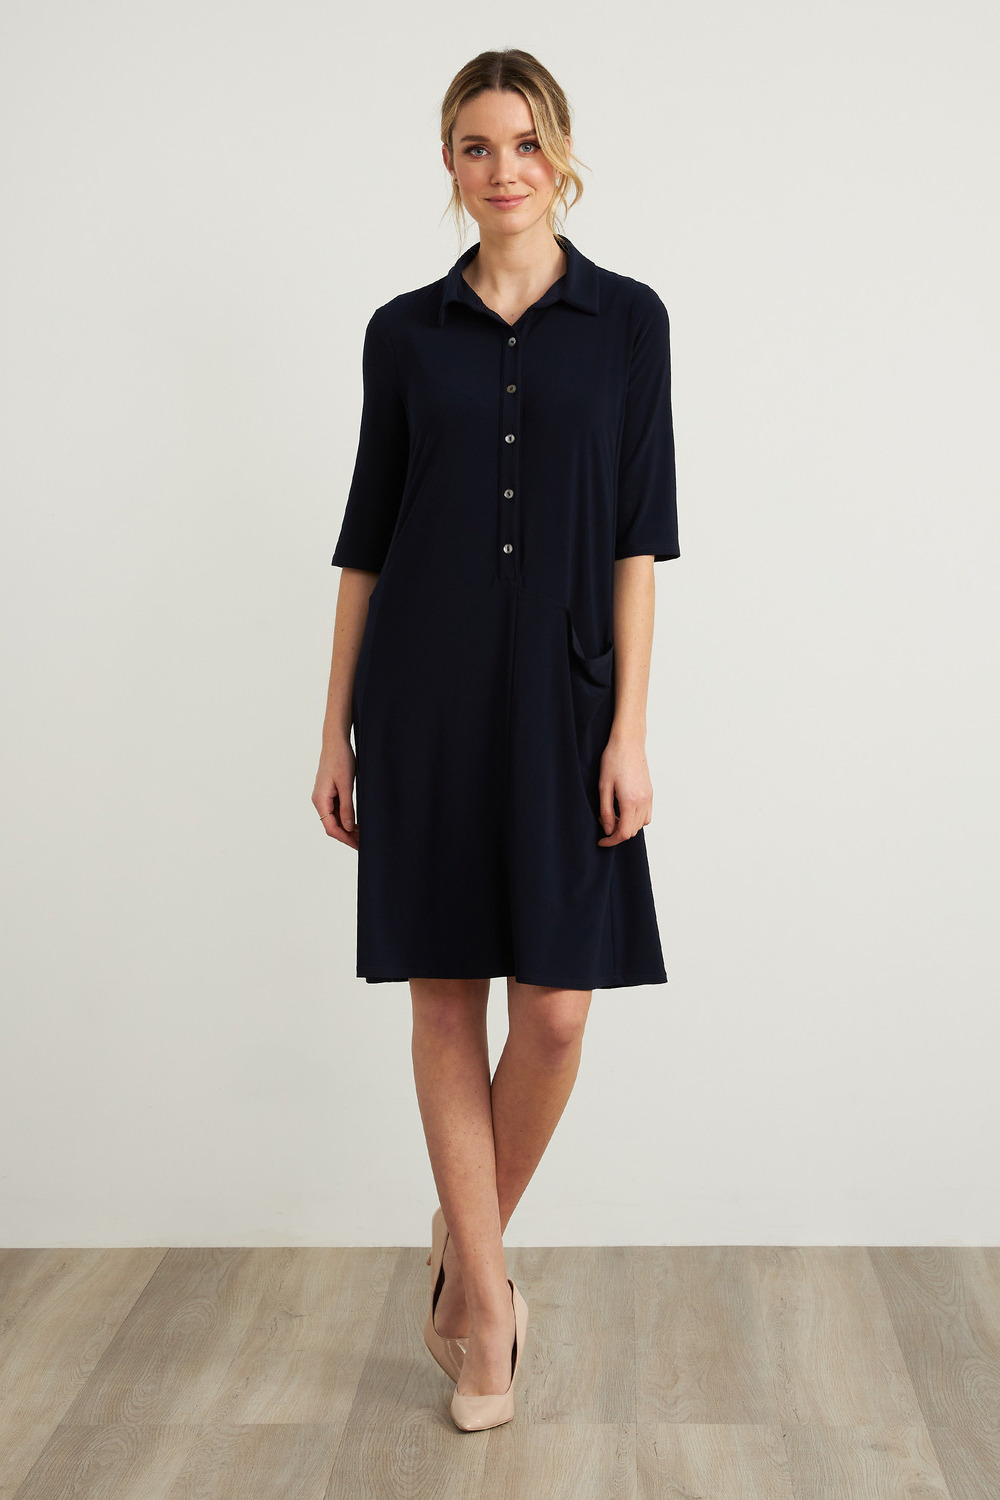 Joseph Ribkoff Shirt Dress Style 212287. Midnight Blue 40